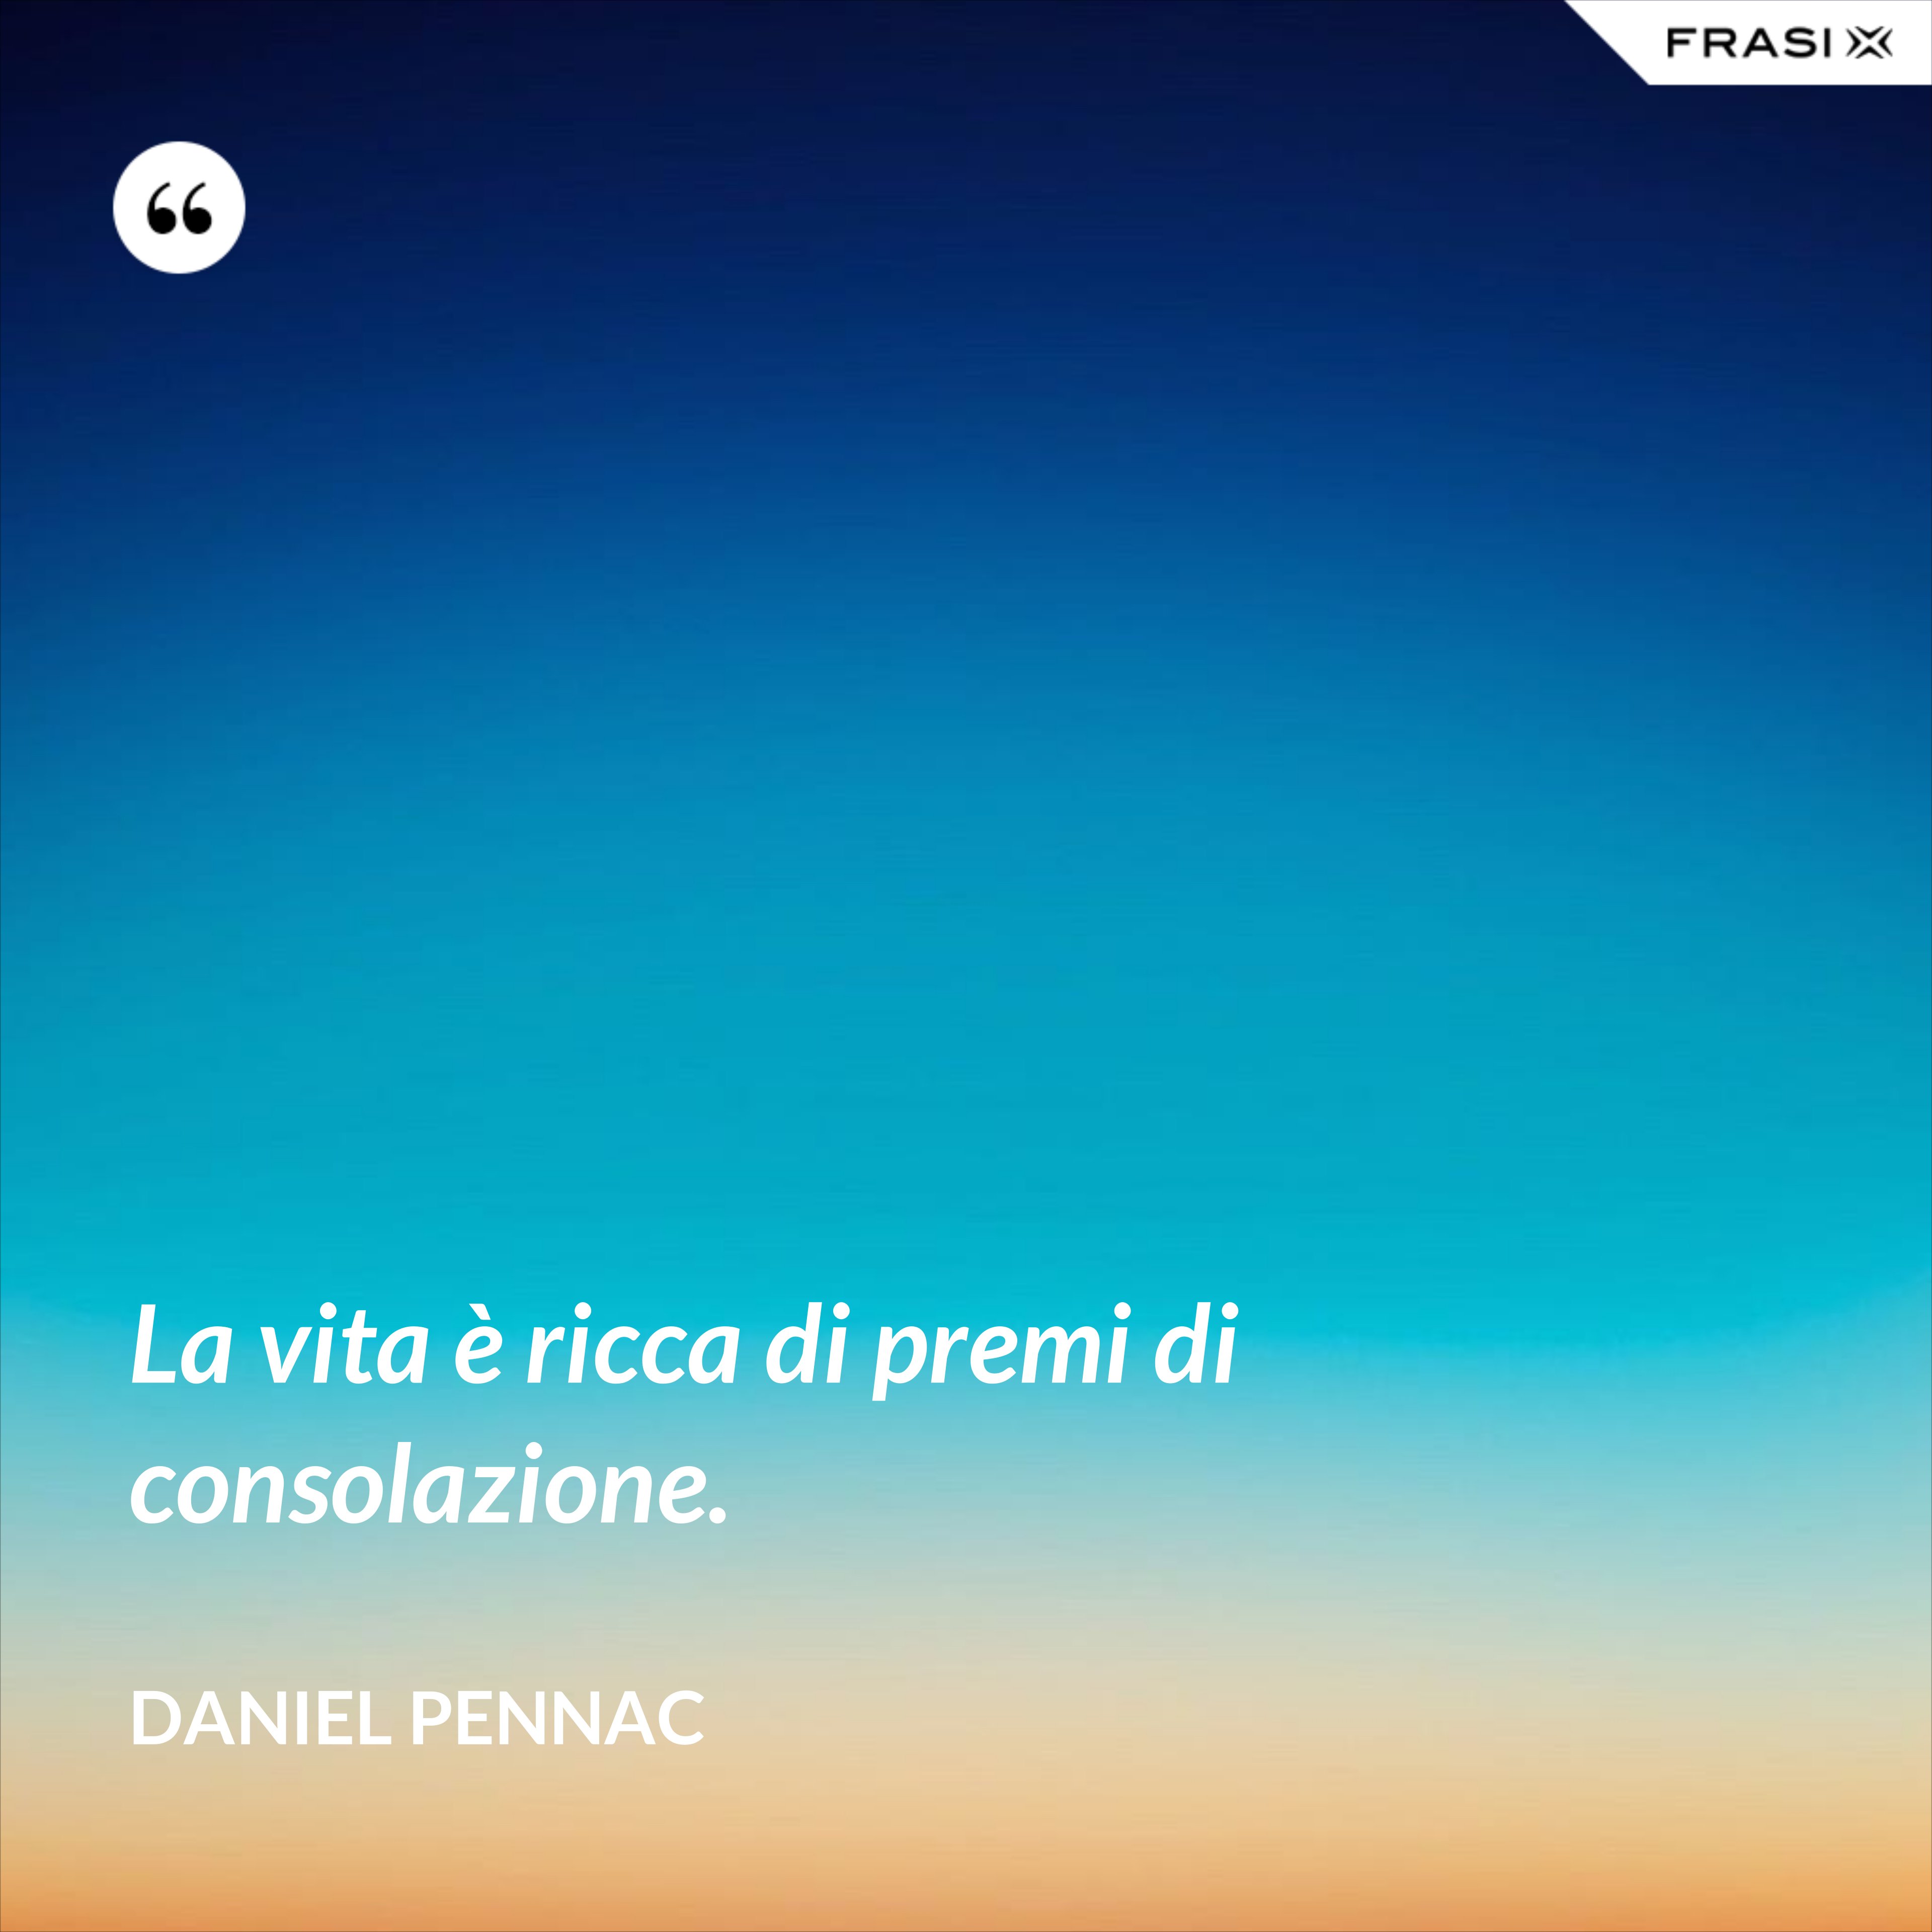 La vita è ricca di premi di consolazione. - Daniel Pennac